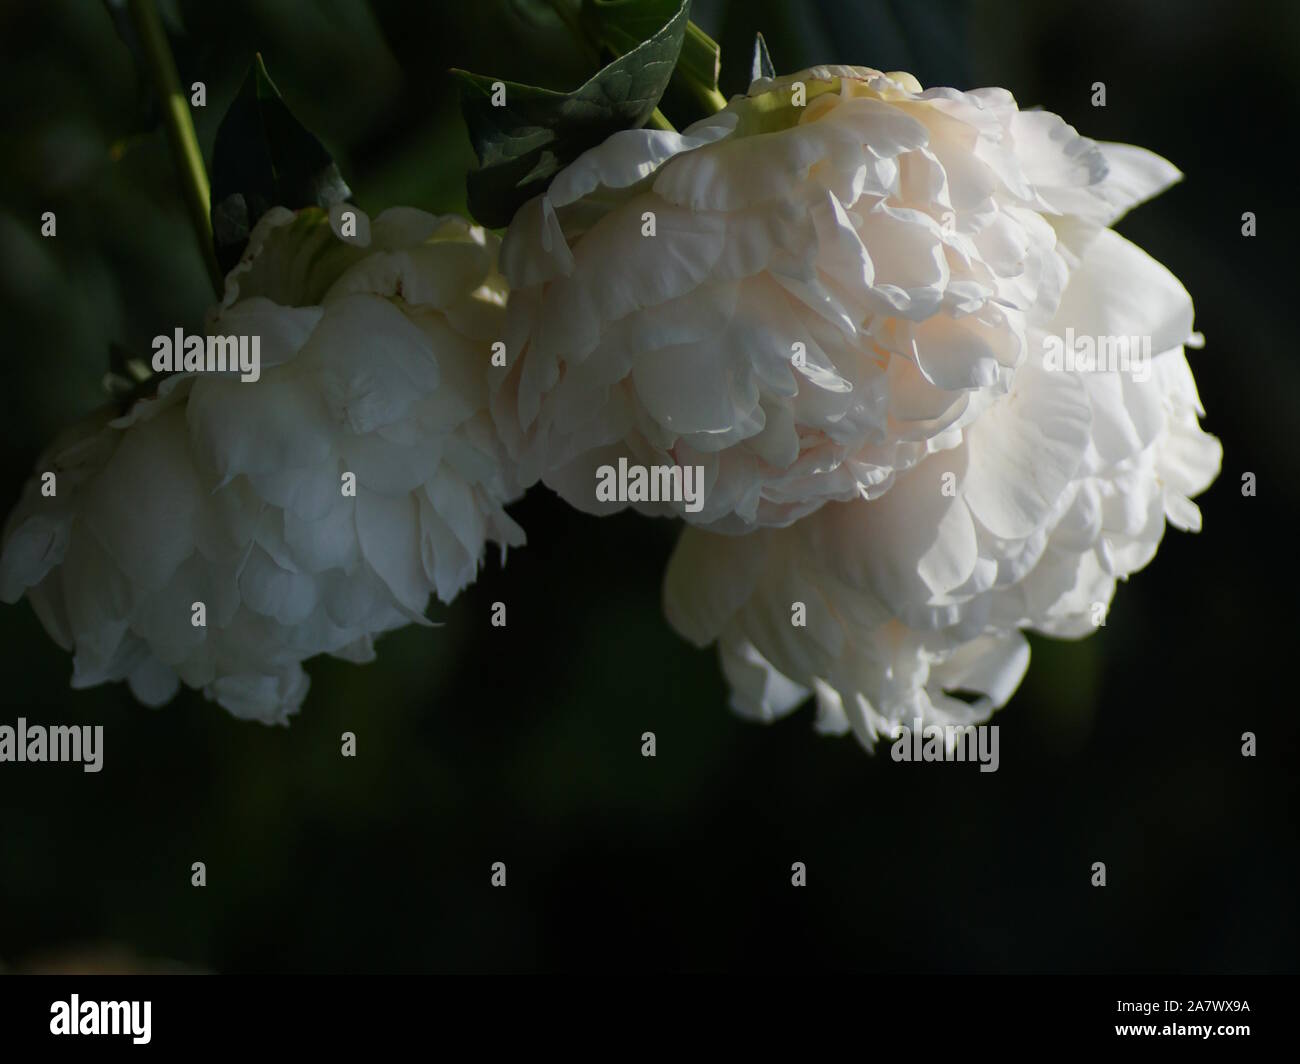 Peony Corinne Wersan.  Double white peony flower. Paeonia lactiflora (Chinese peony or common garden peony). Stock Photo